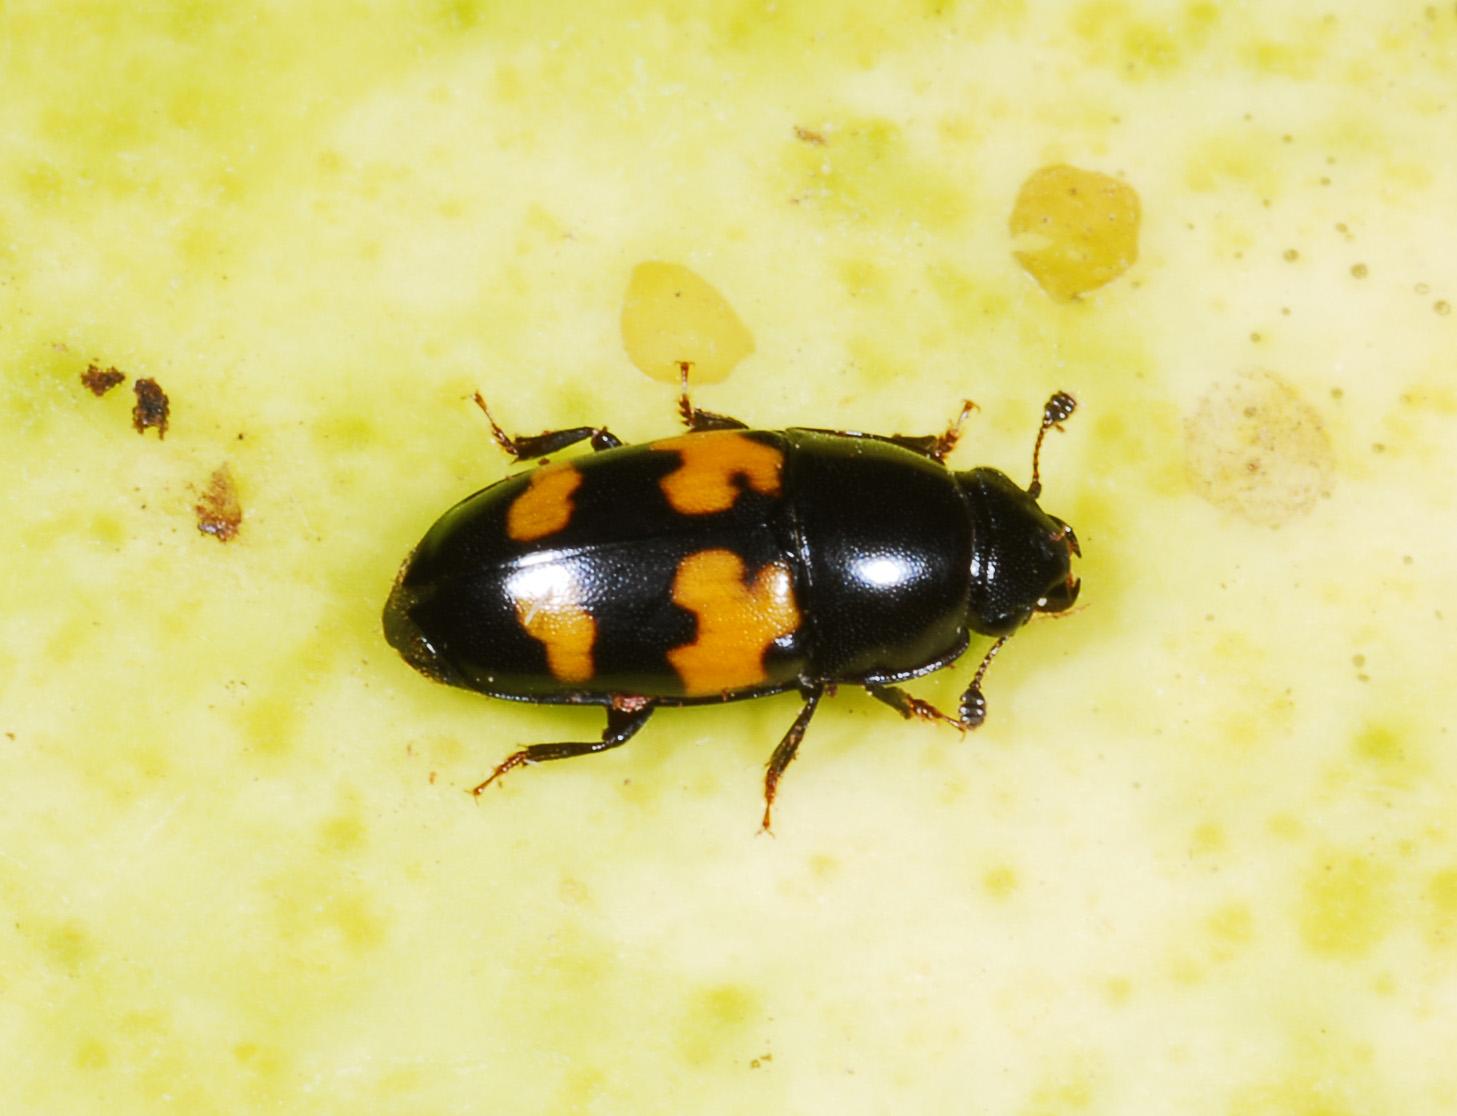 Adult sap beetle (Bessin, UKY)